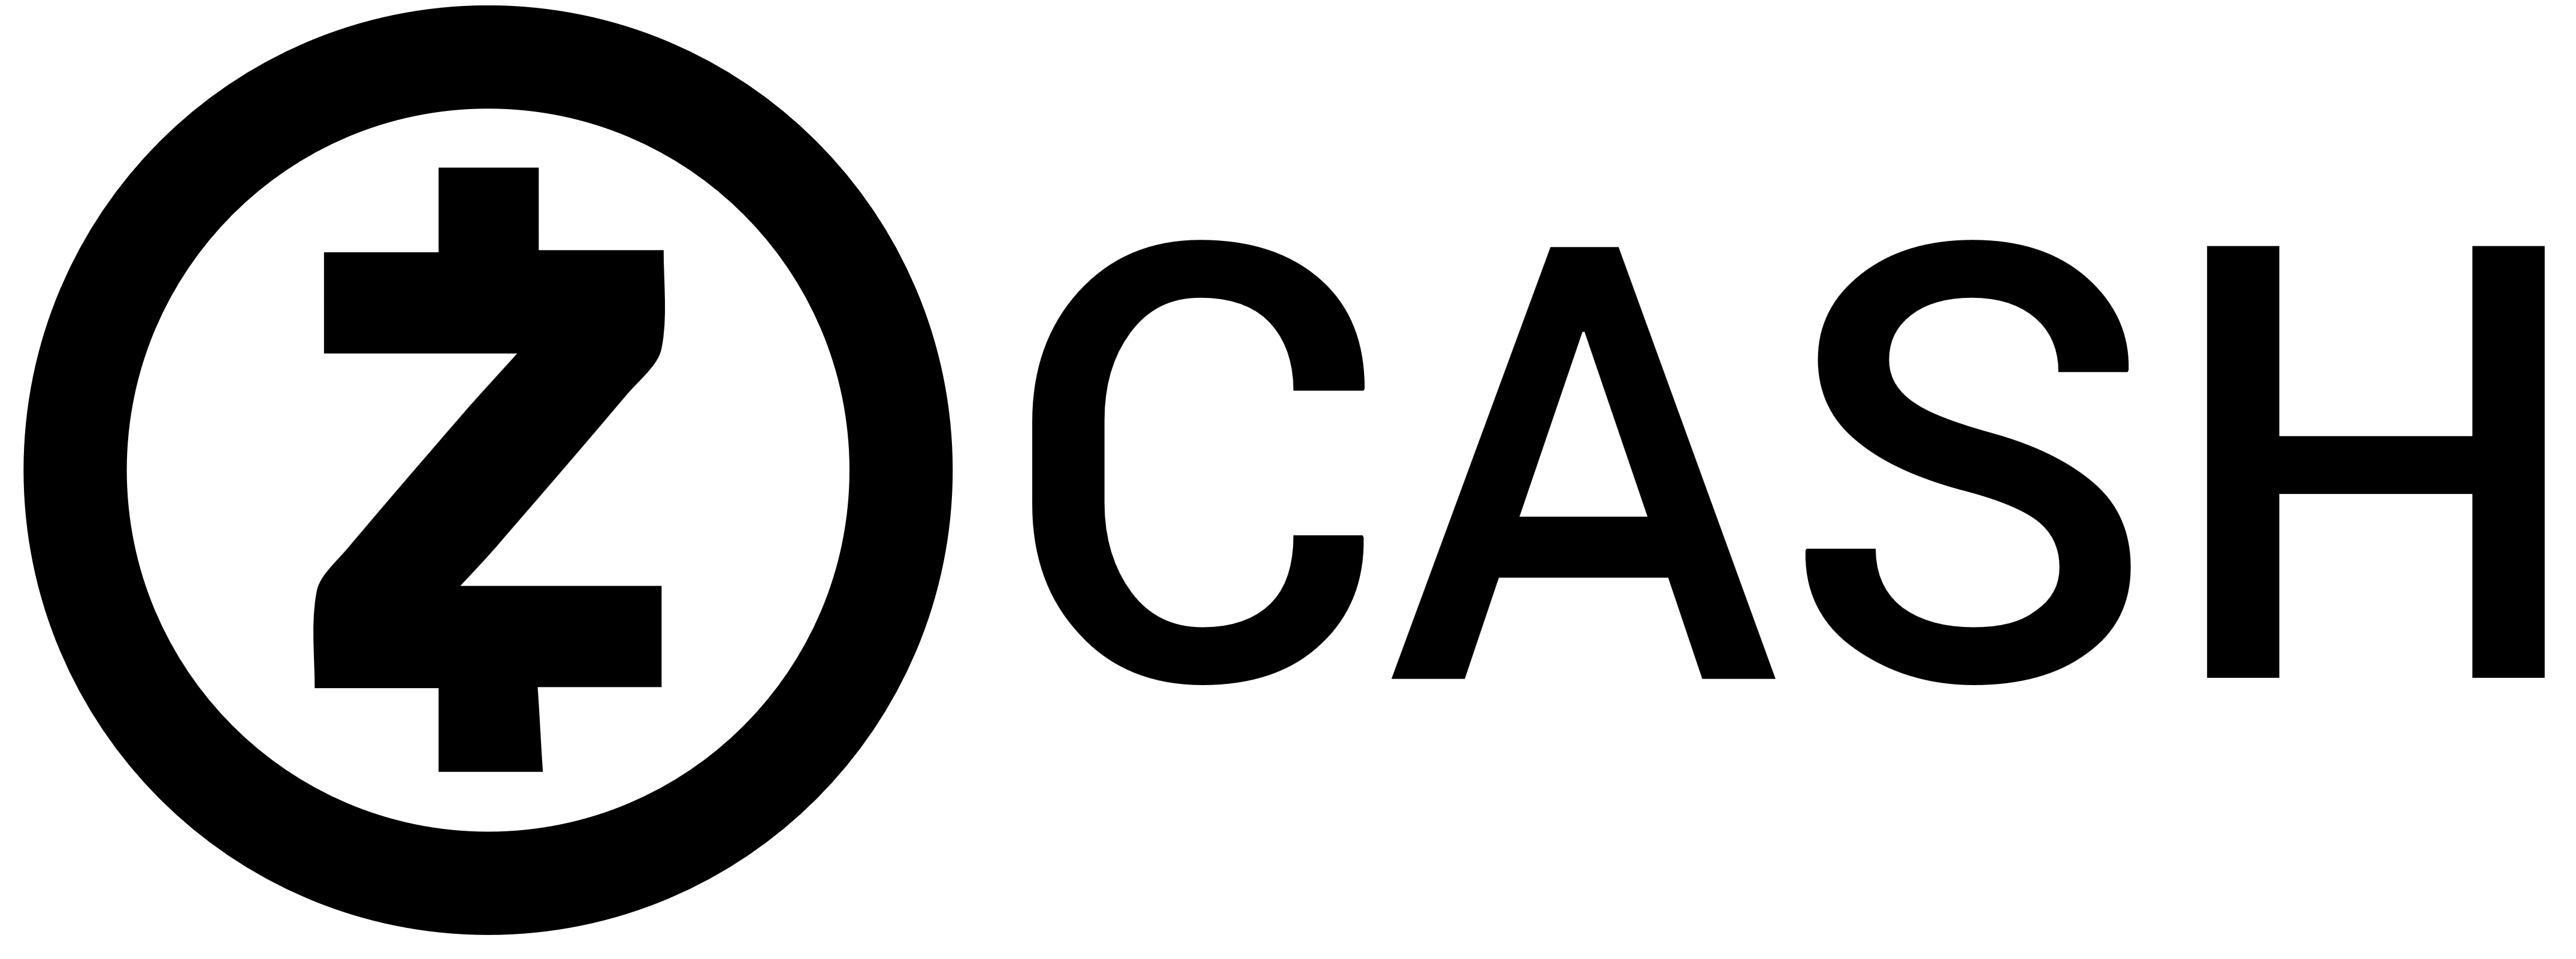 Zcash logo, logotype